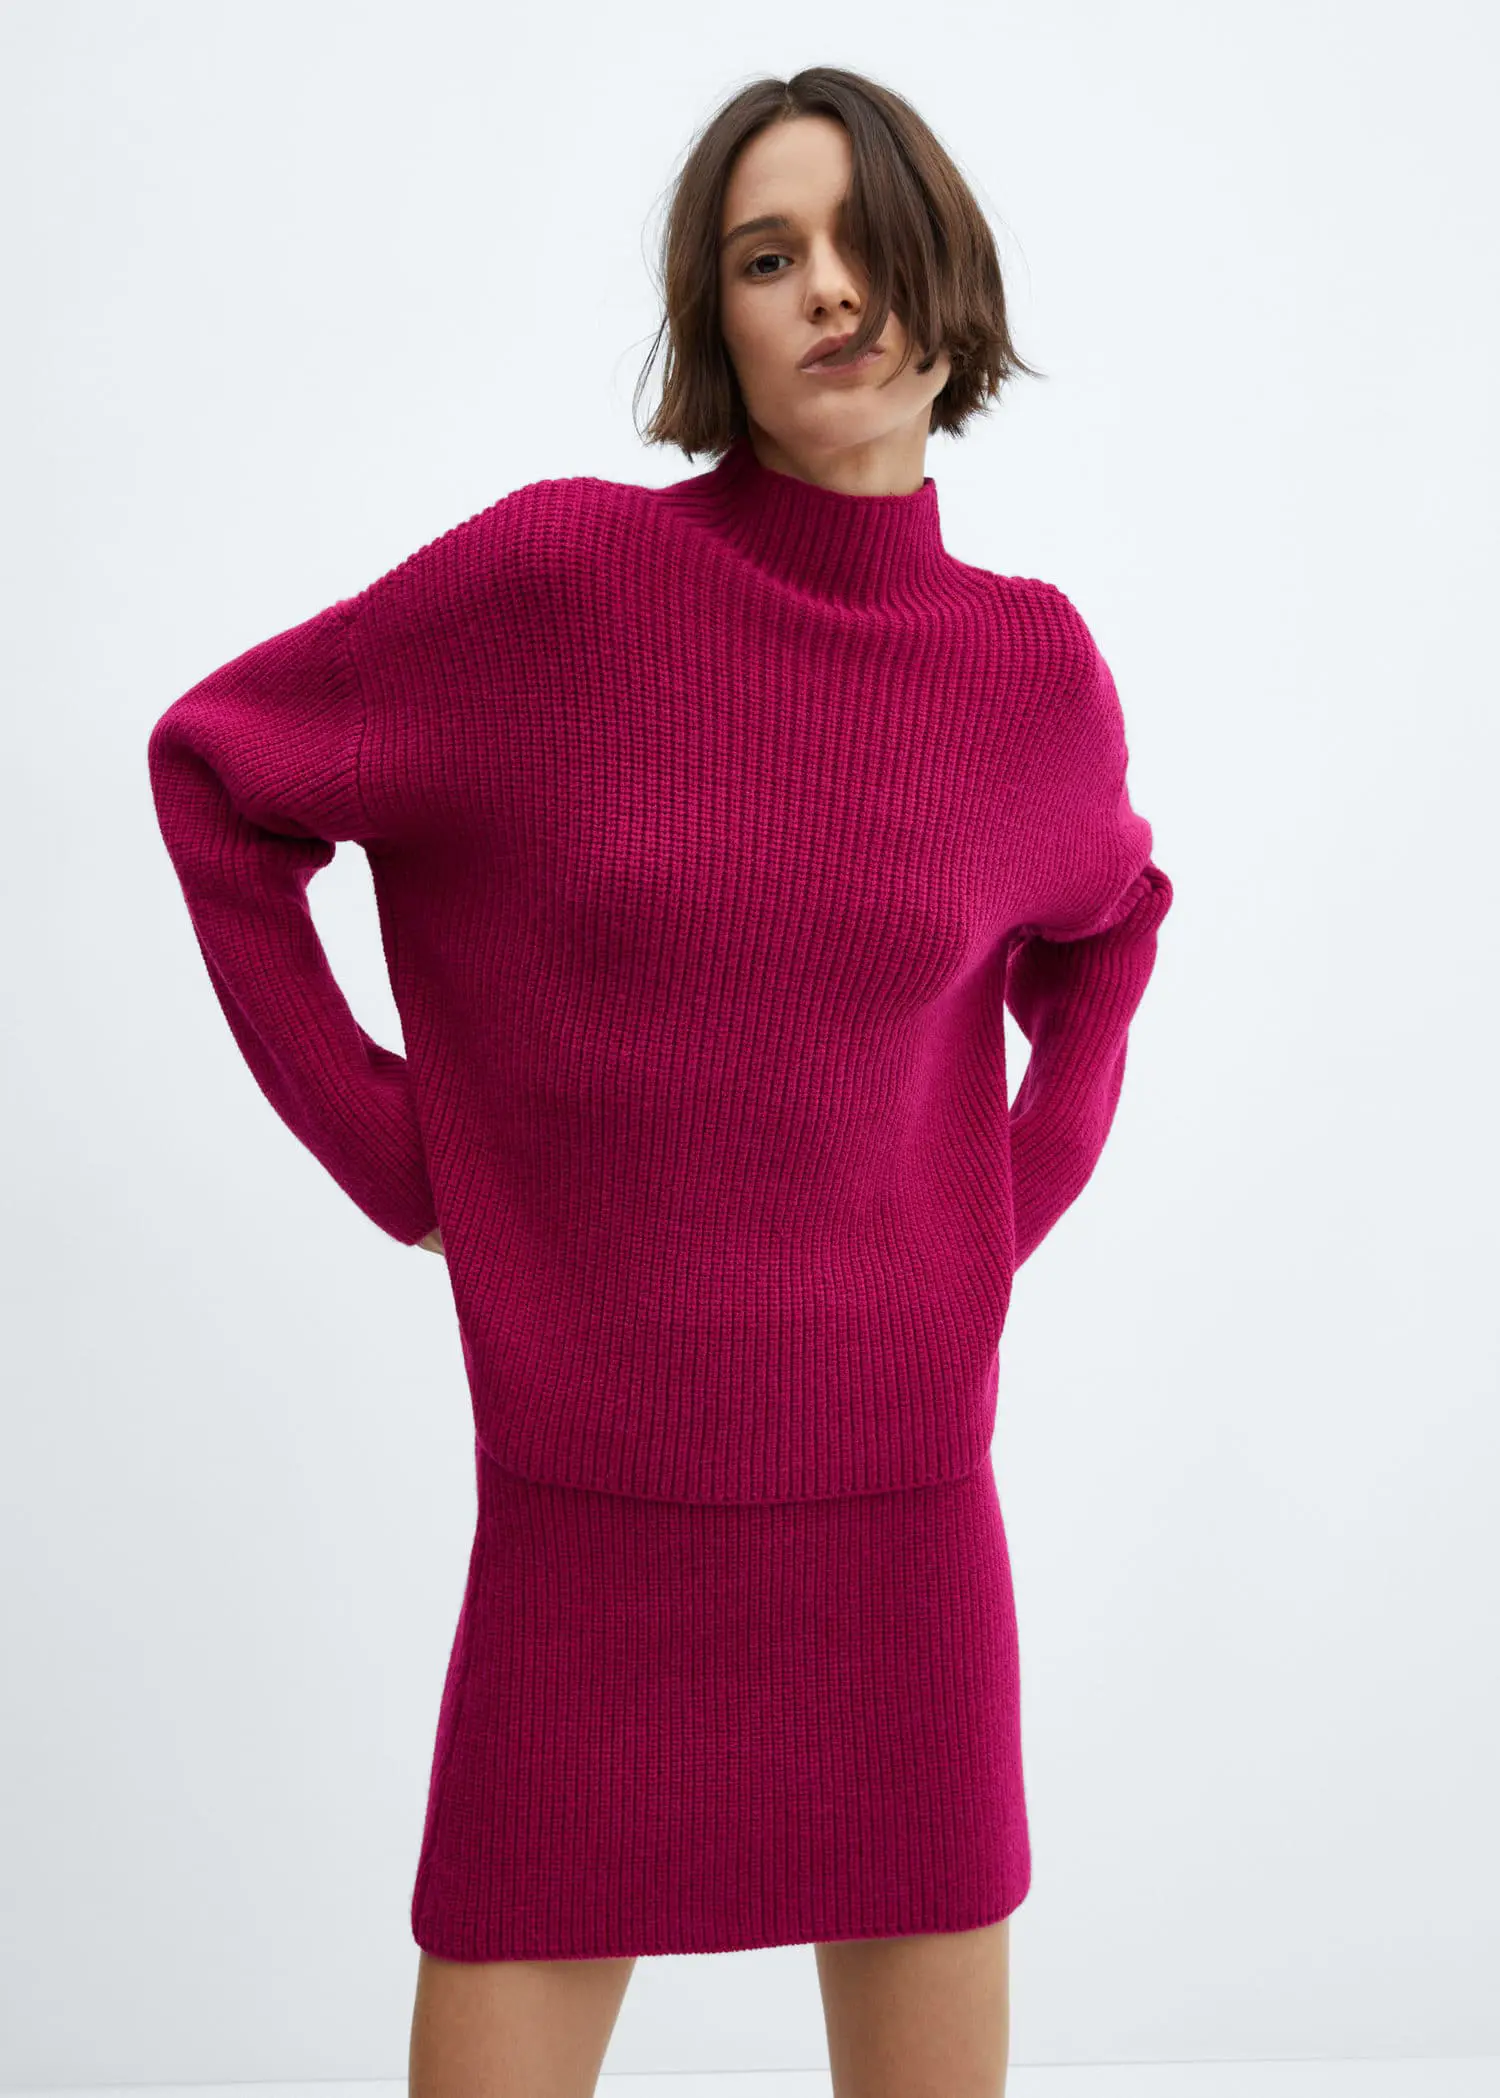 Mango Turtleneck knit sweater. 2